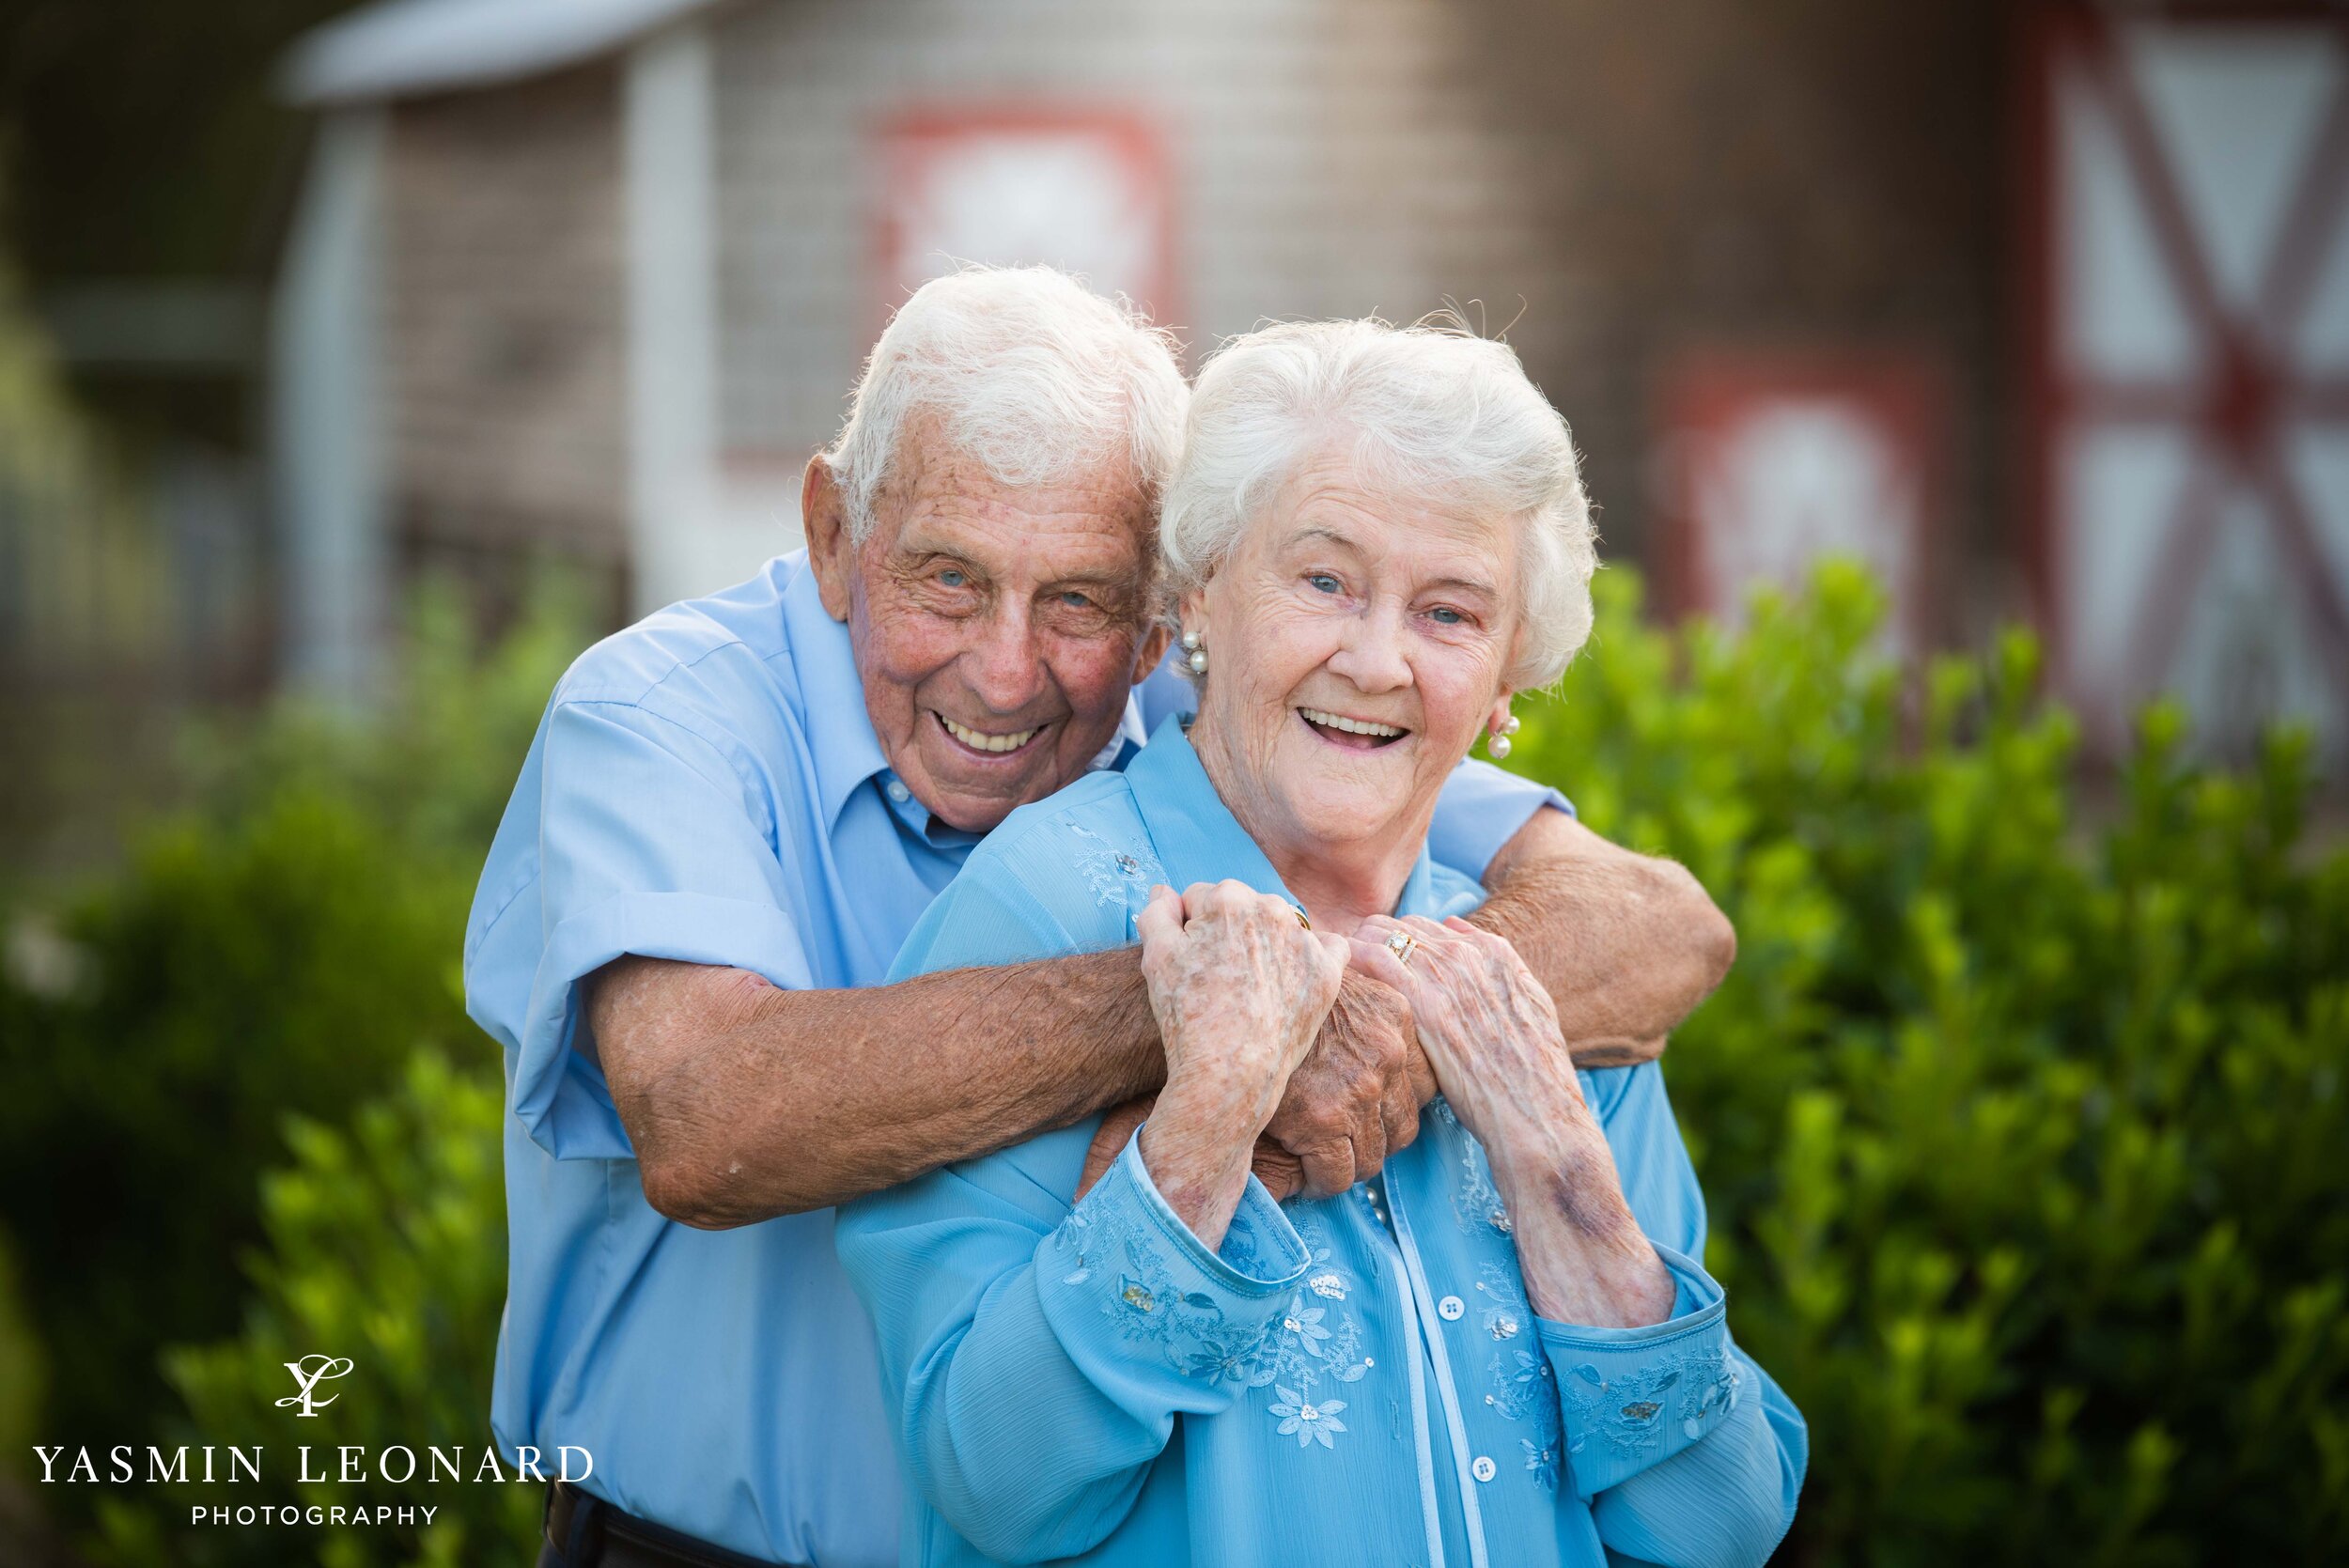 70th Wedding Anniversary - Married Anniversary - Older Couple Photos - Married after 70 years - Yasmin Leonard Photography - High Point Wedding Photographer-4.jpg